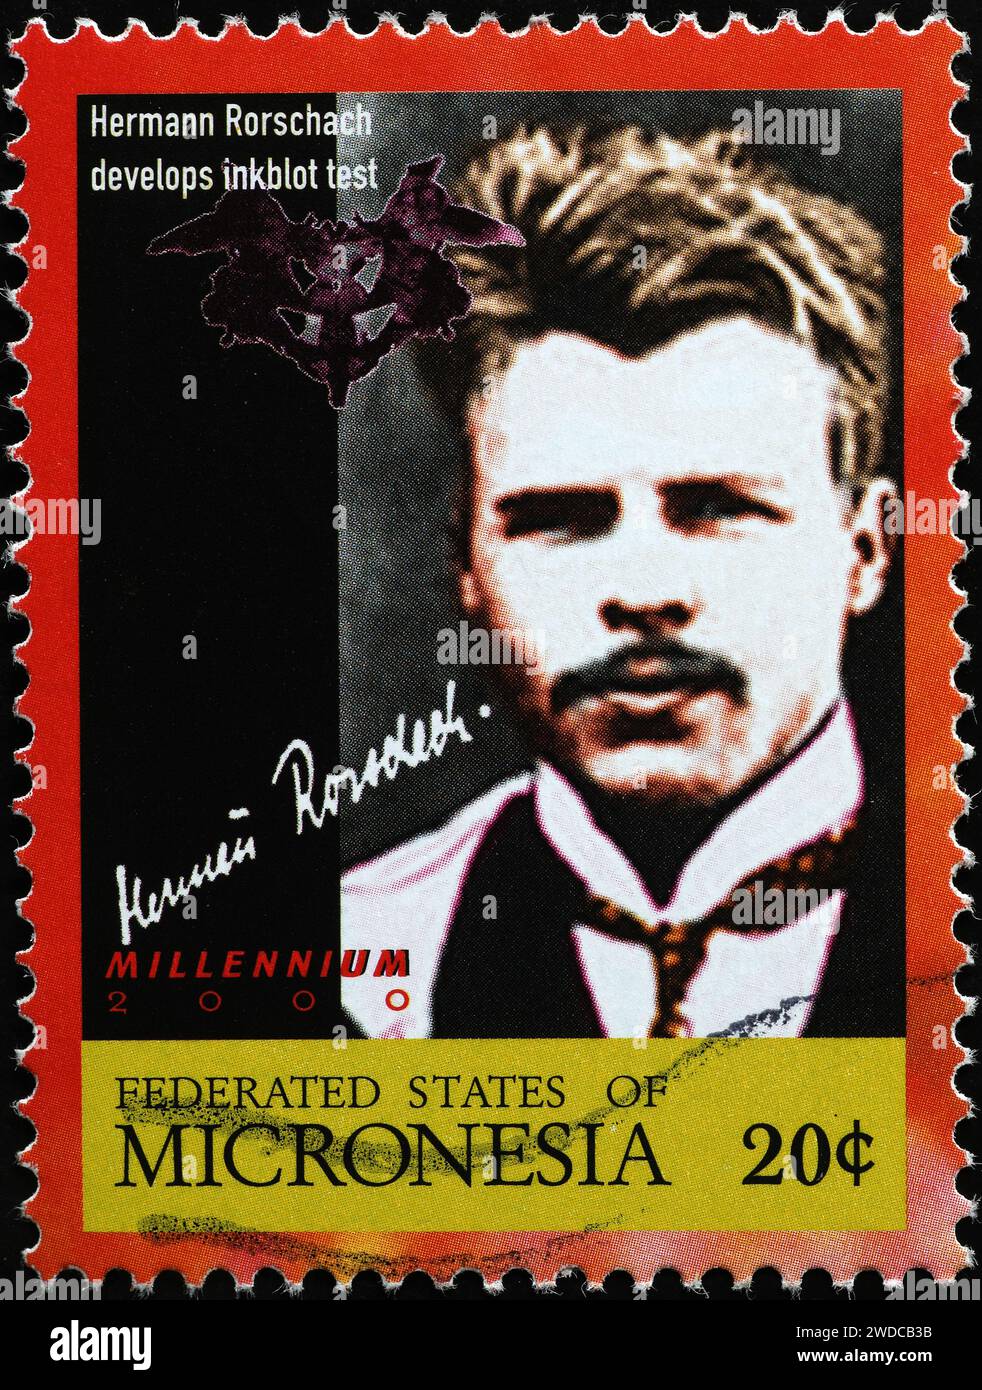 Hermann Rorschach, inventor of ink blot test on postage stamp Stock Photo